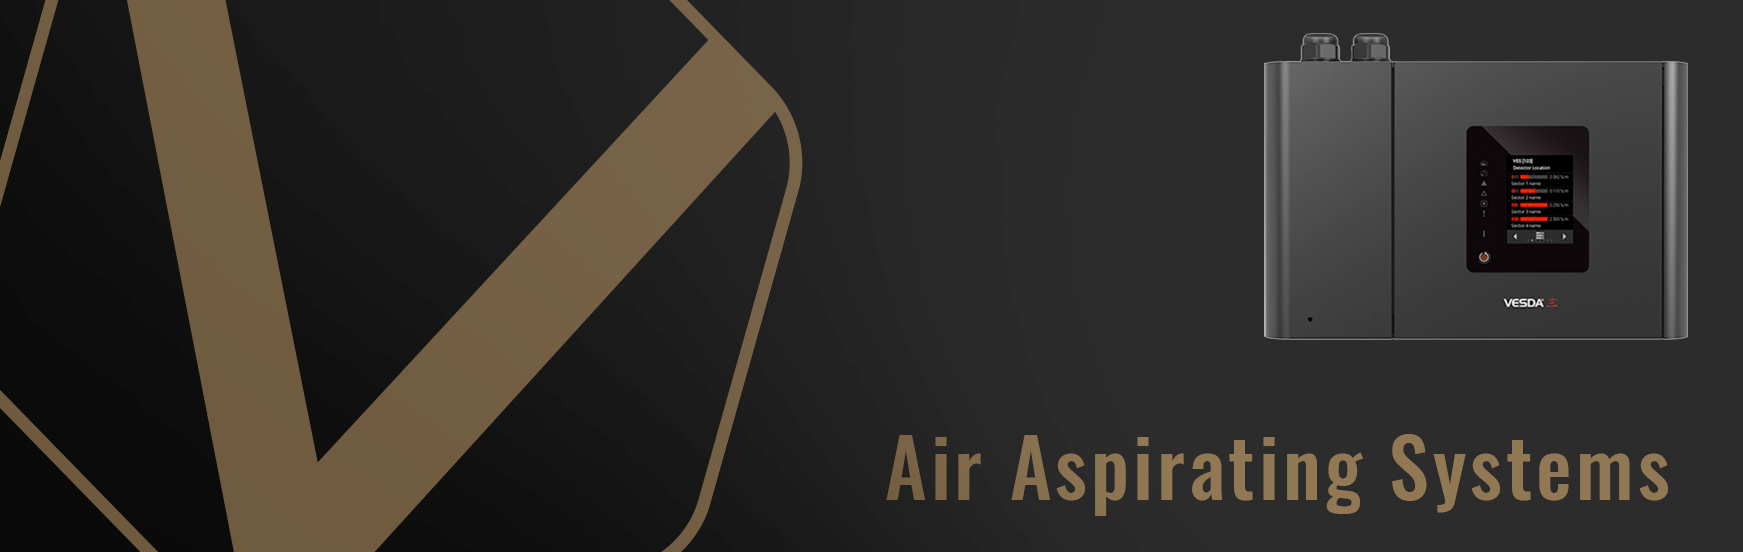 Air Aspirating Systems